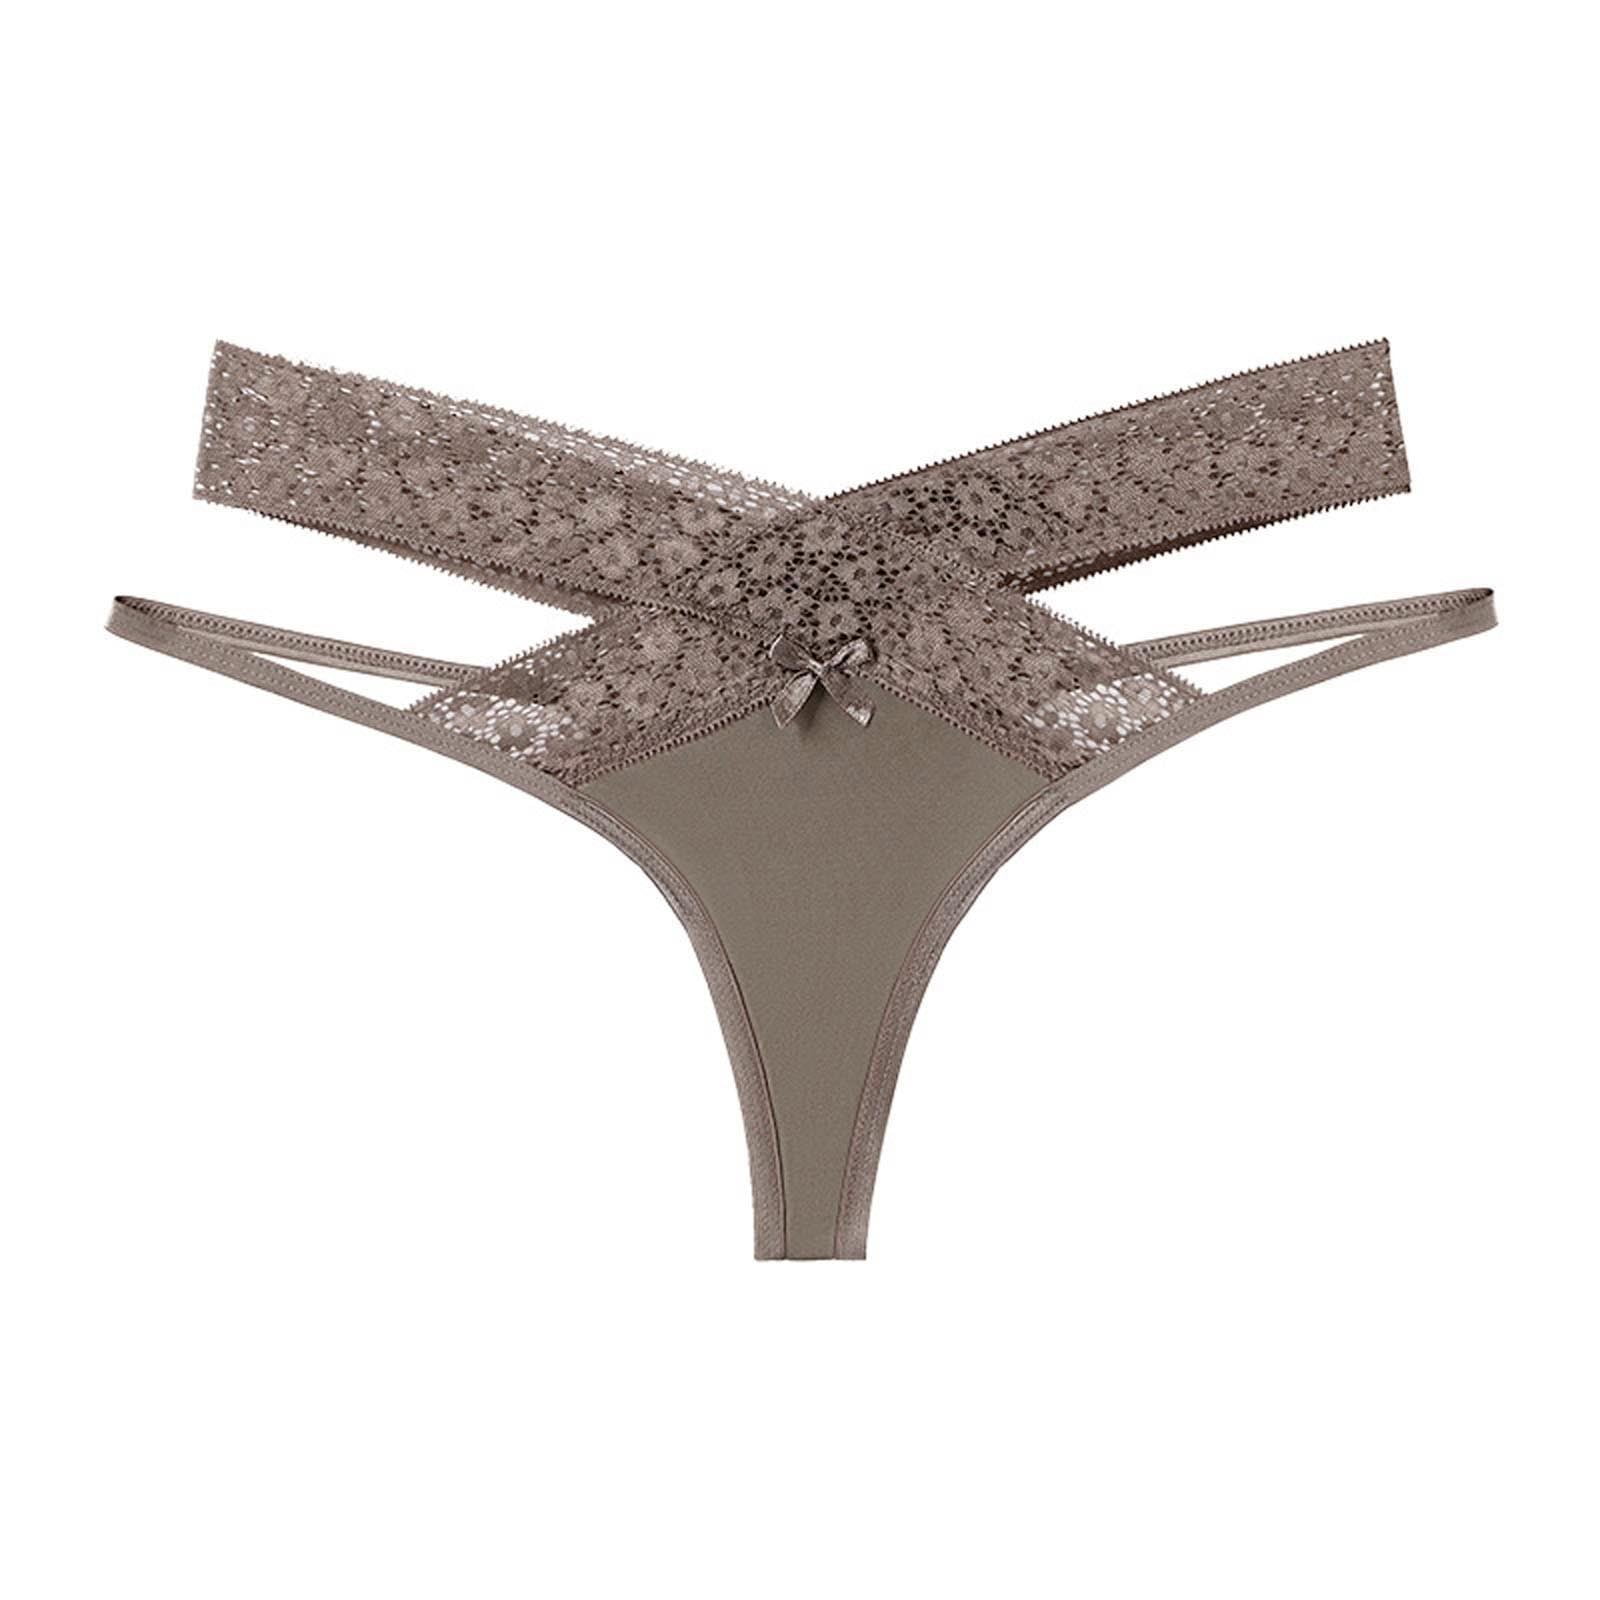 LBECLEY Wear Translucent Underwear Tops Hollow Bra Lace Lingerie